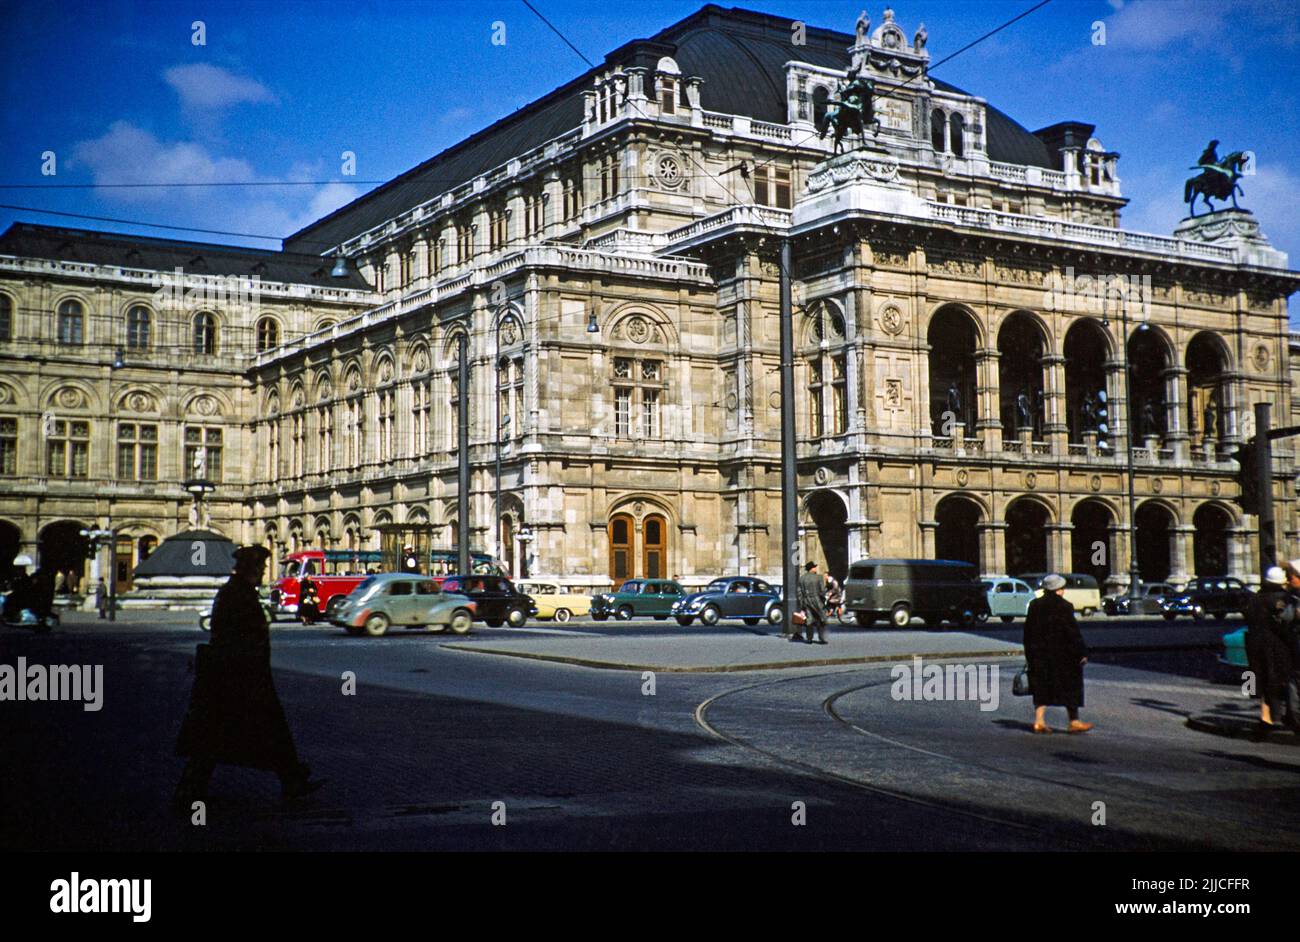 Operahouse building, Vienna, Austria 1958 Renaissance Revival architecture completed 1869 Stock Photo